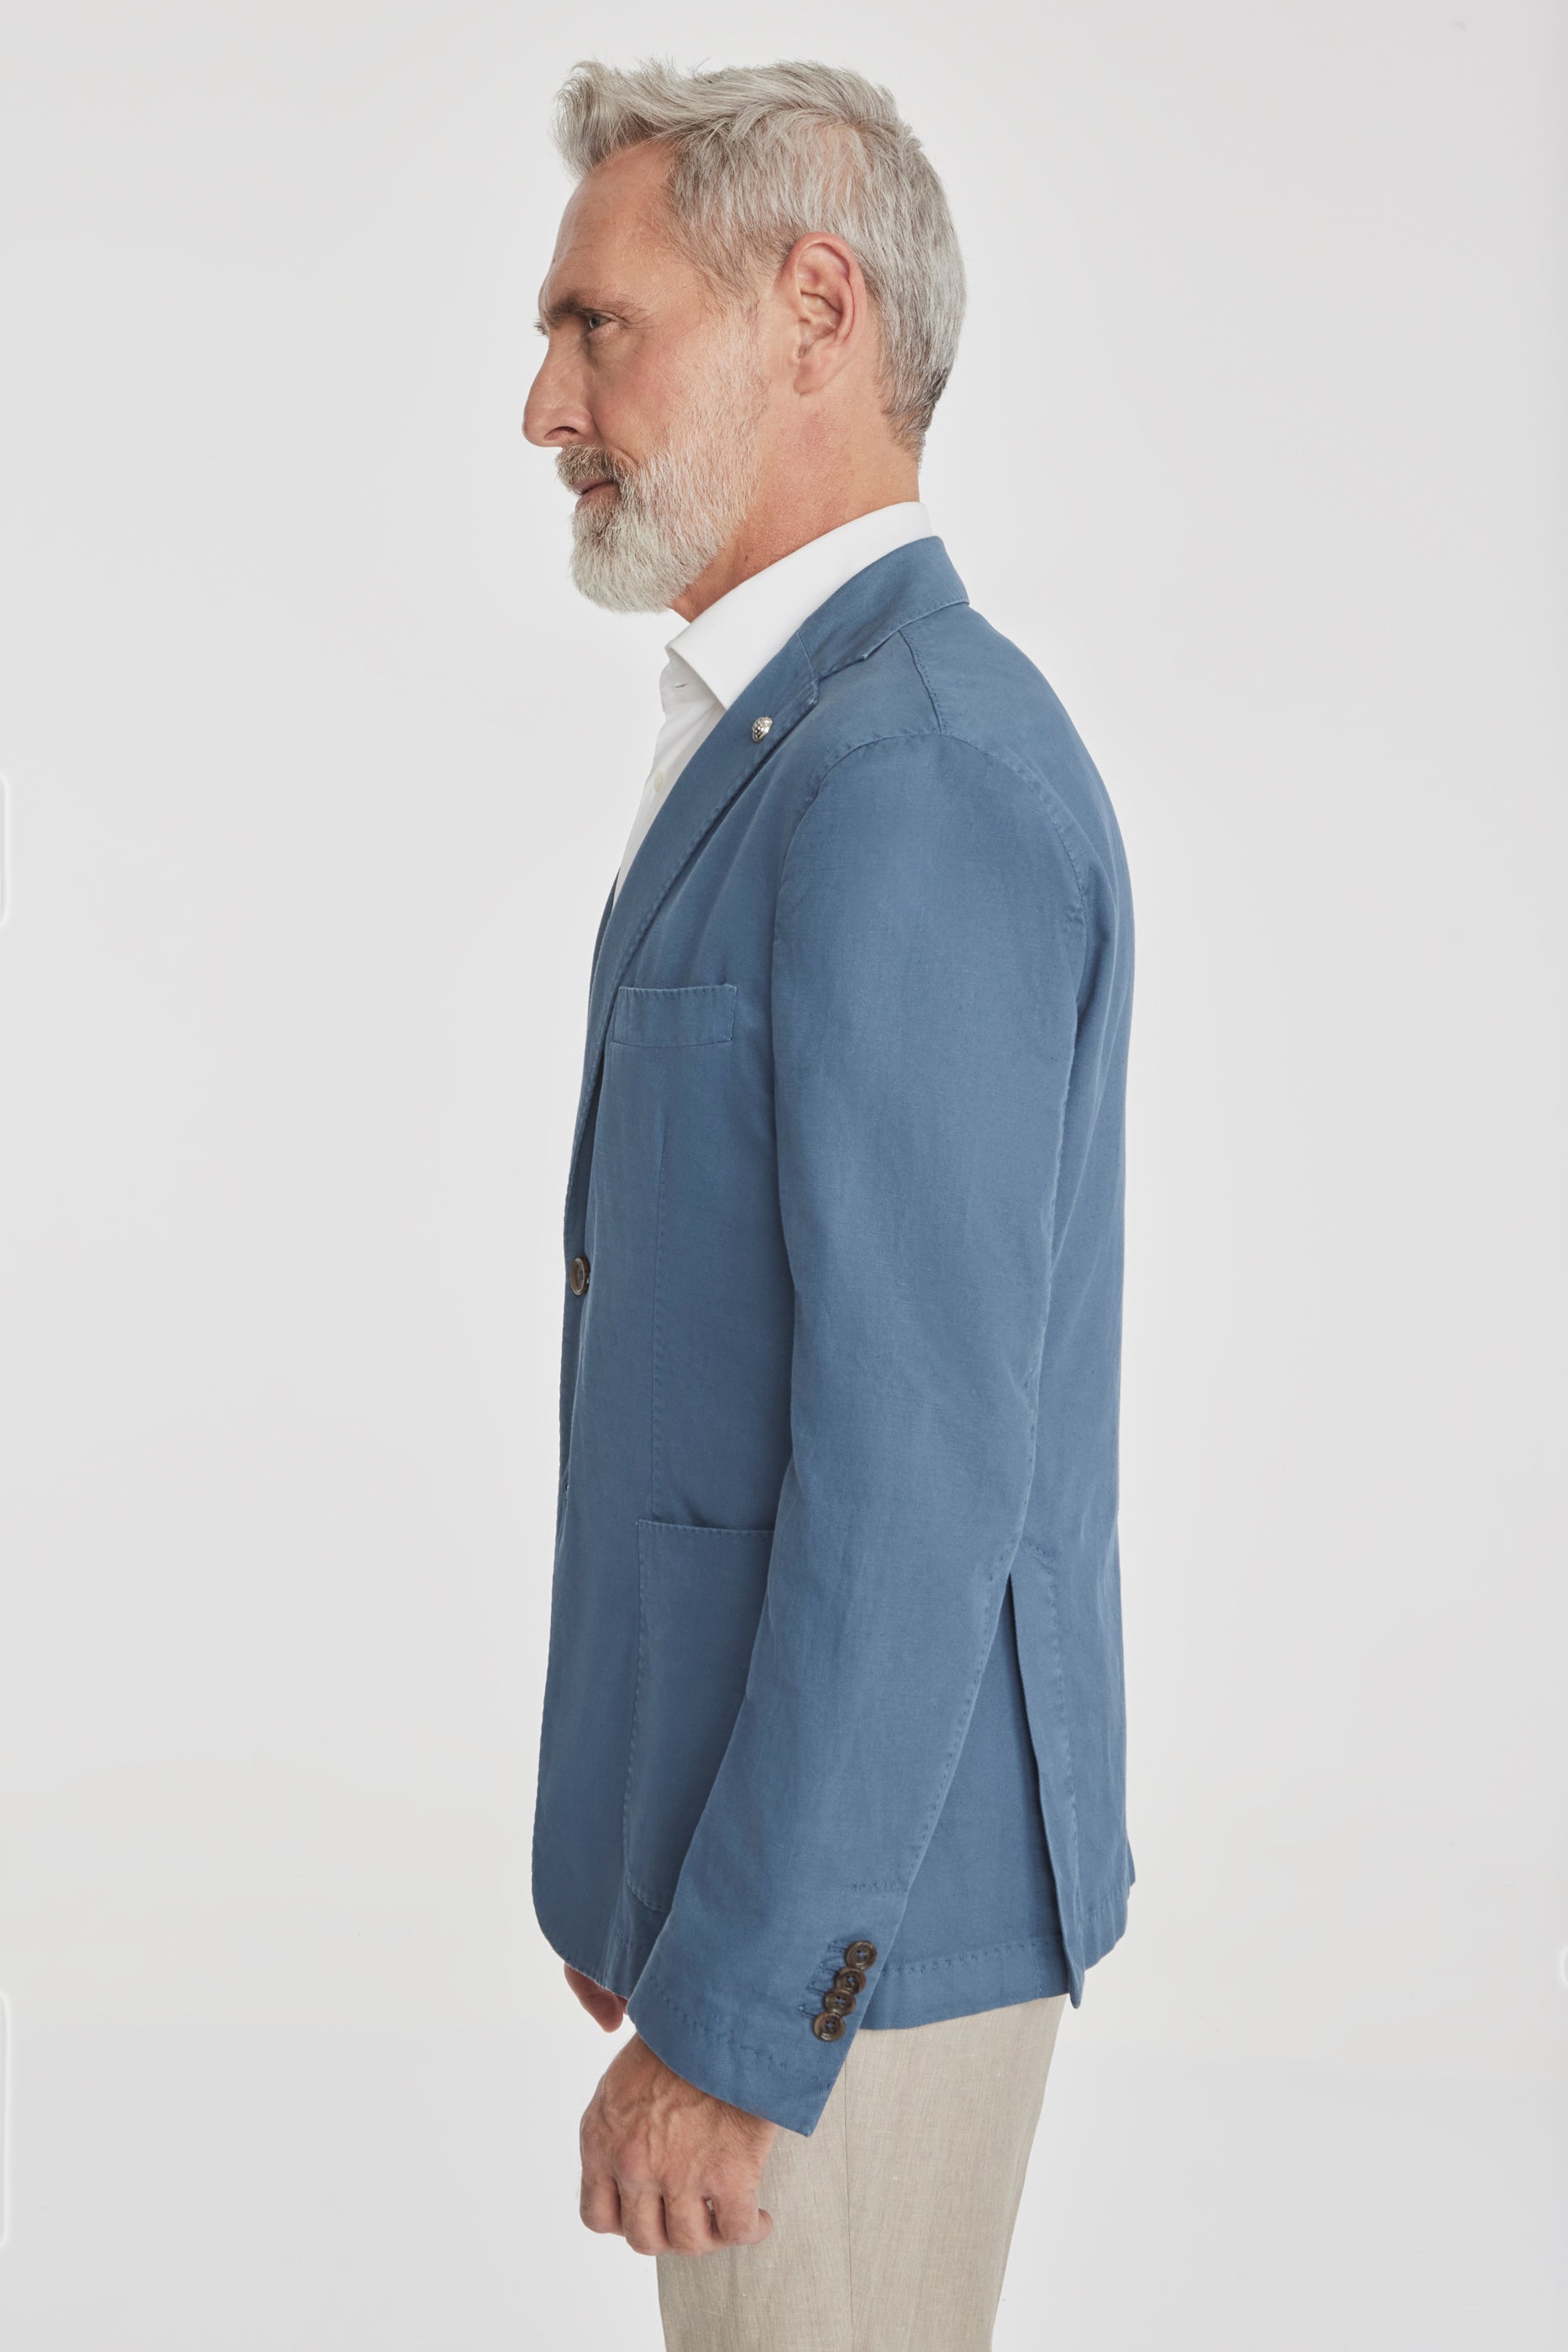 Vue alternative 3 Eaton veston en coton et lin en bleu ciel